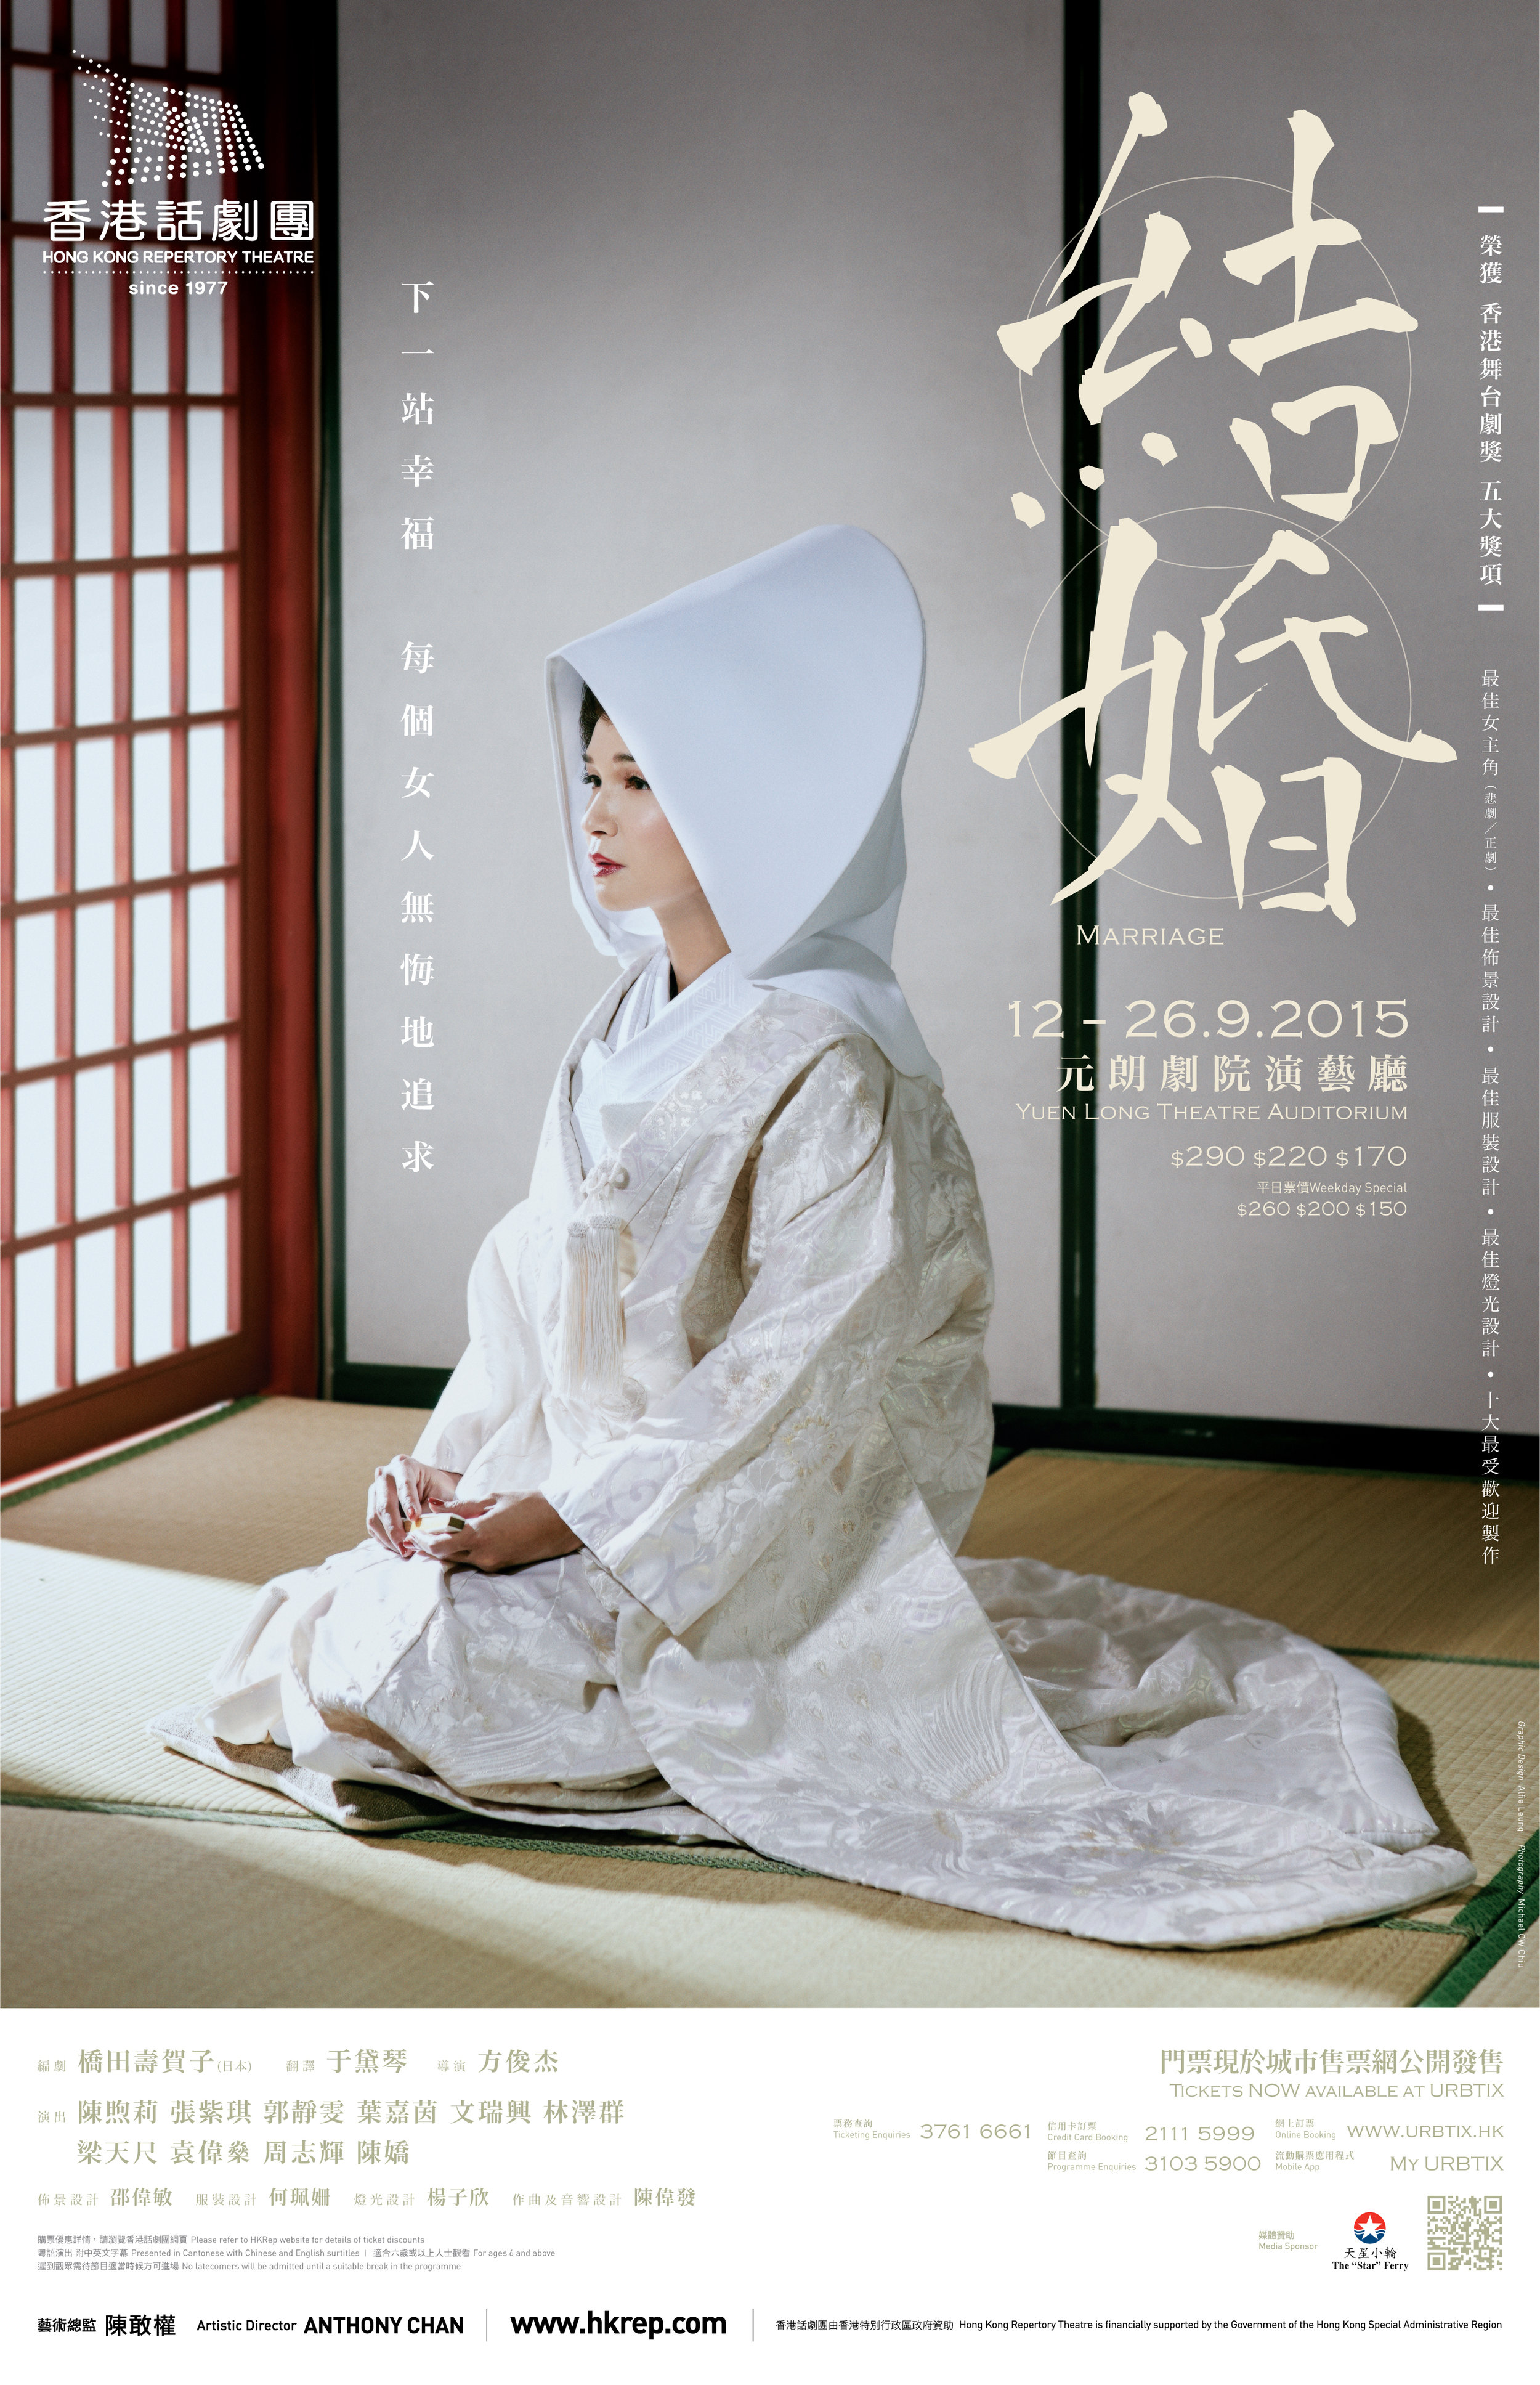 HKREP 'Marriage' (結婚) Rerun Poster. Hong Kong. 2018